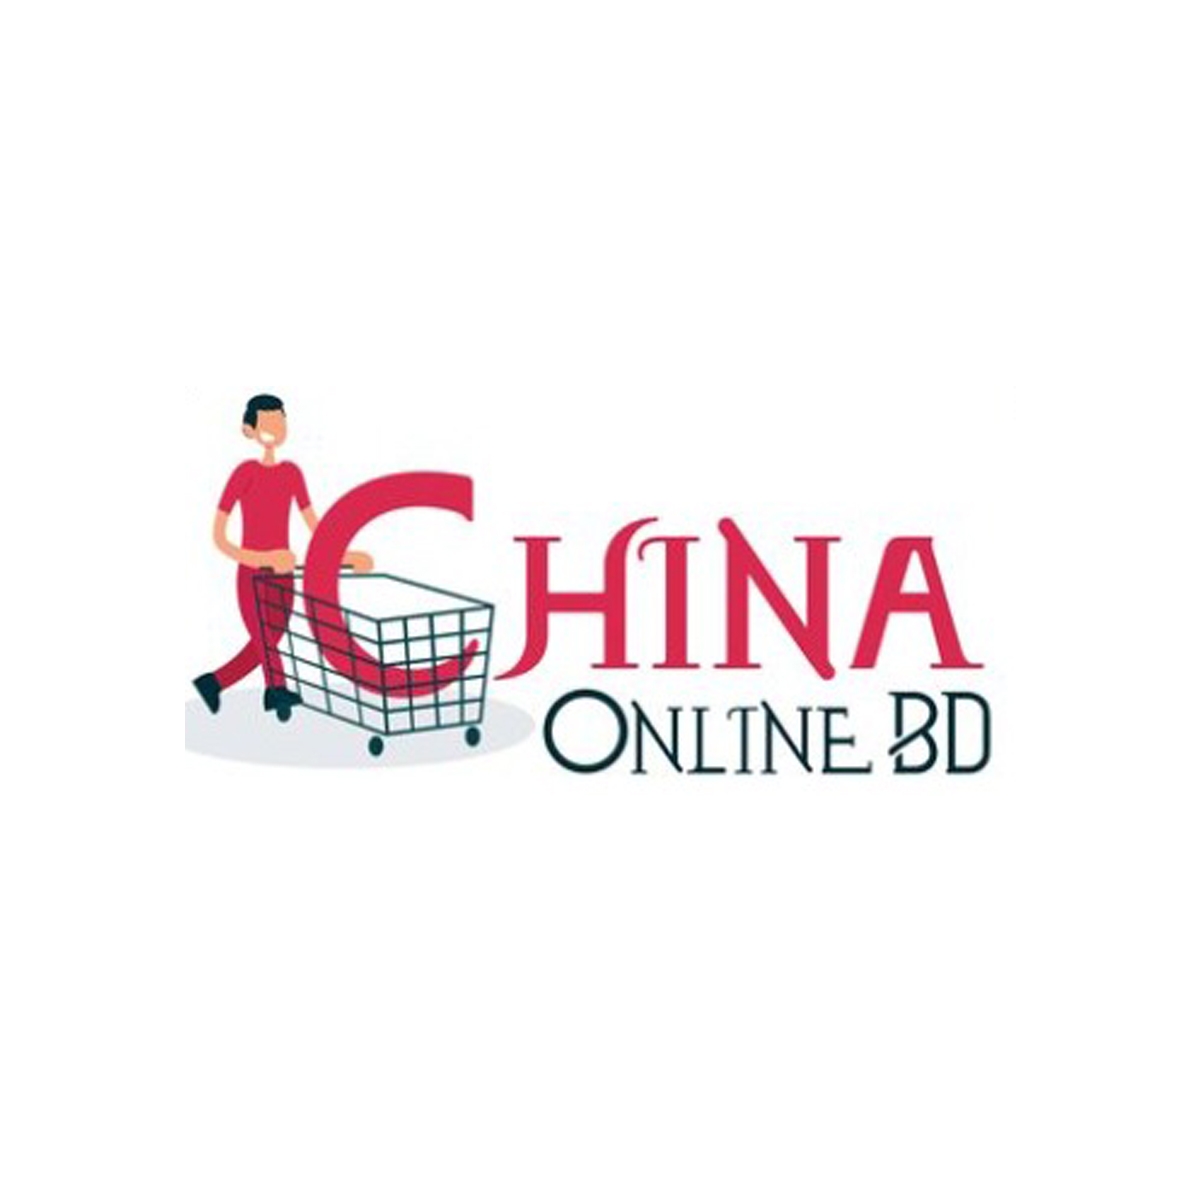 China Online Bd